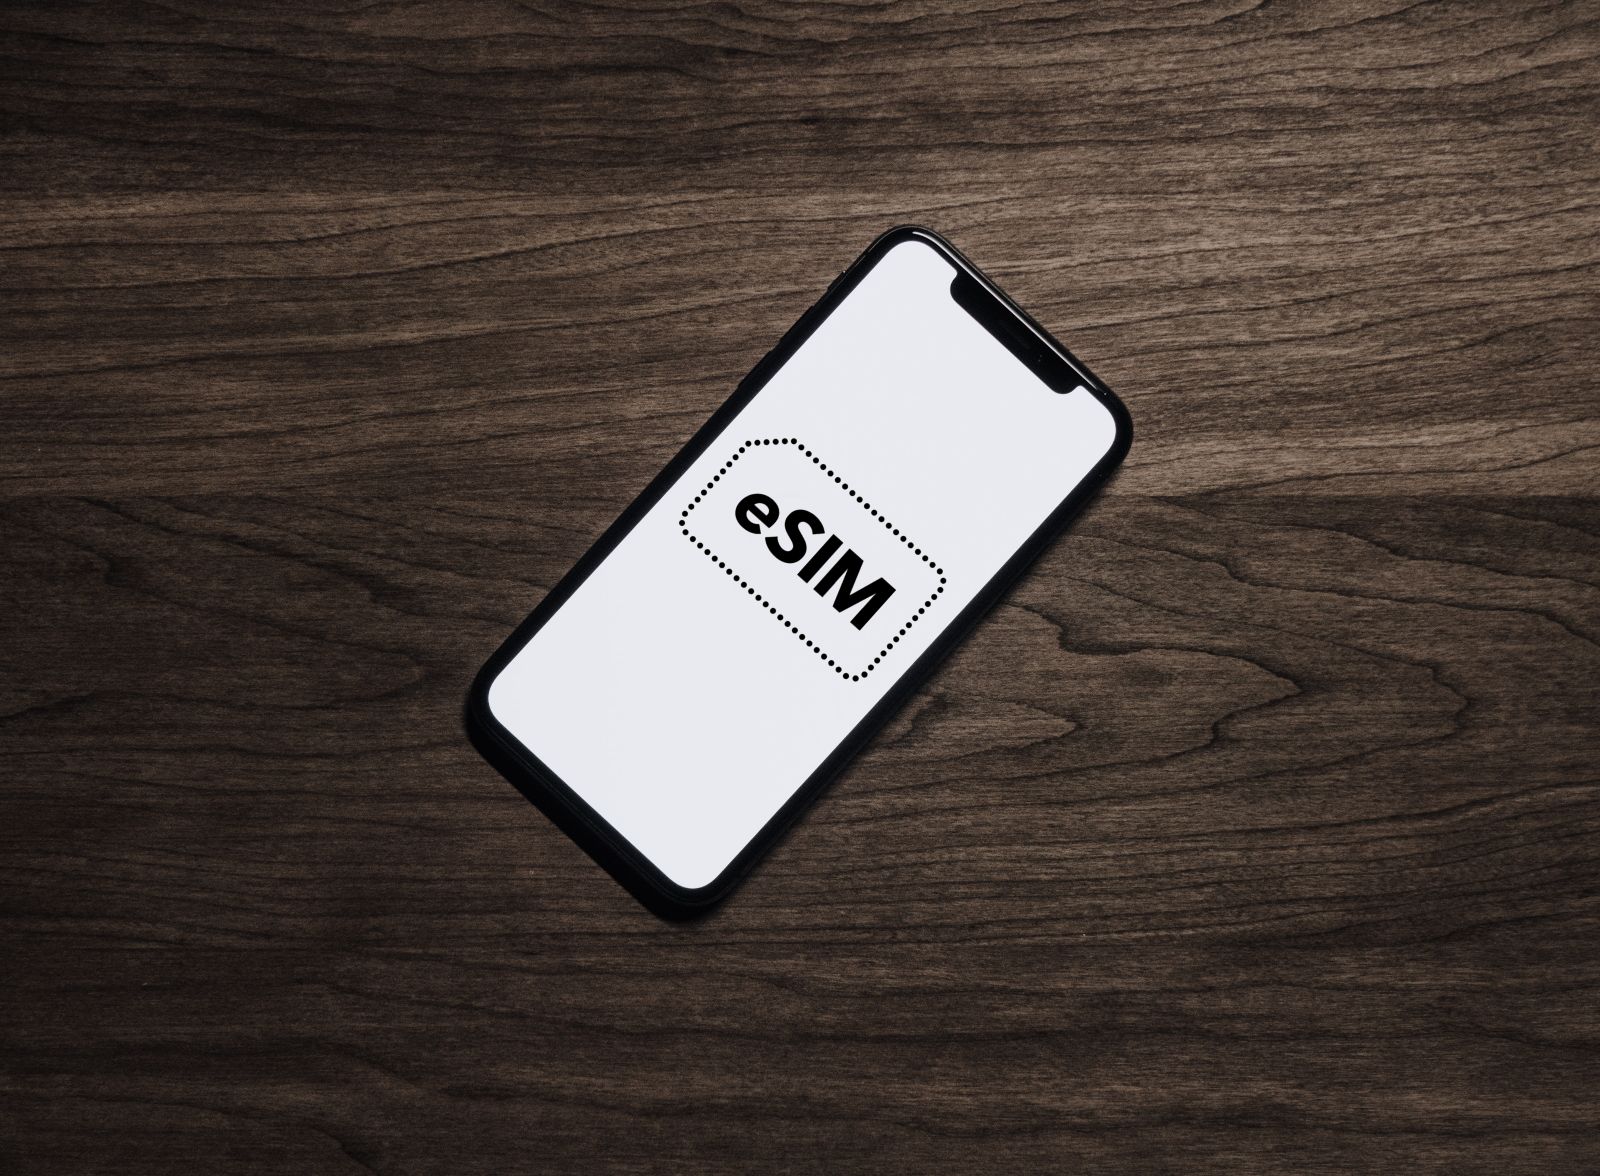 a phone with eSIM